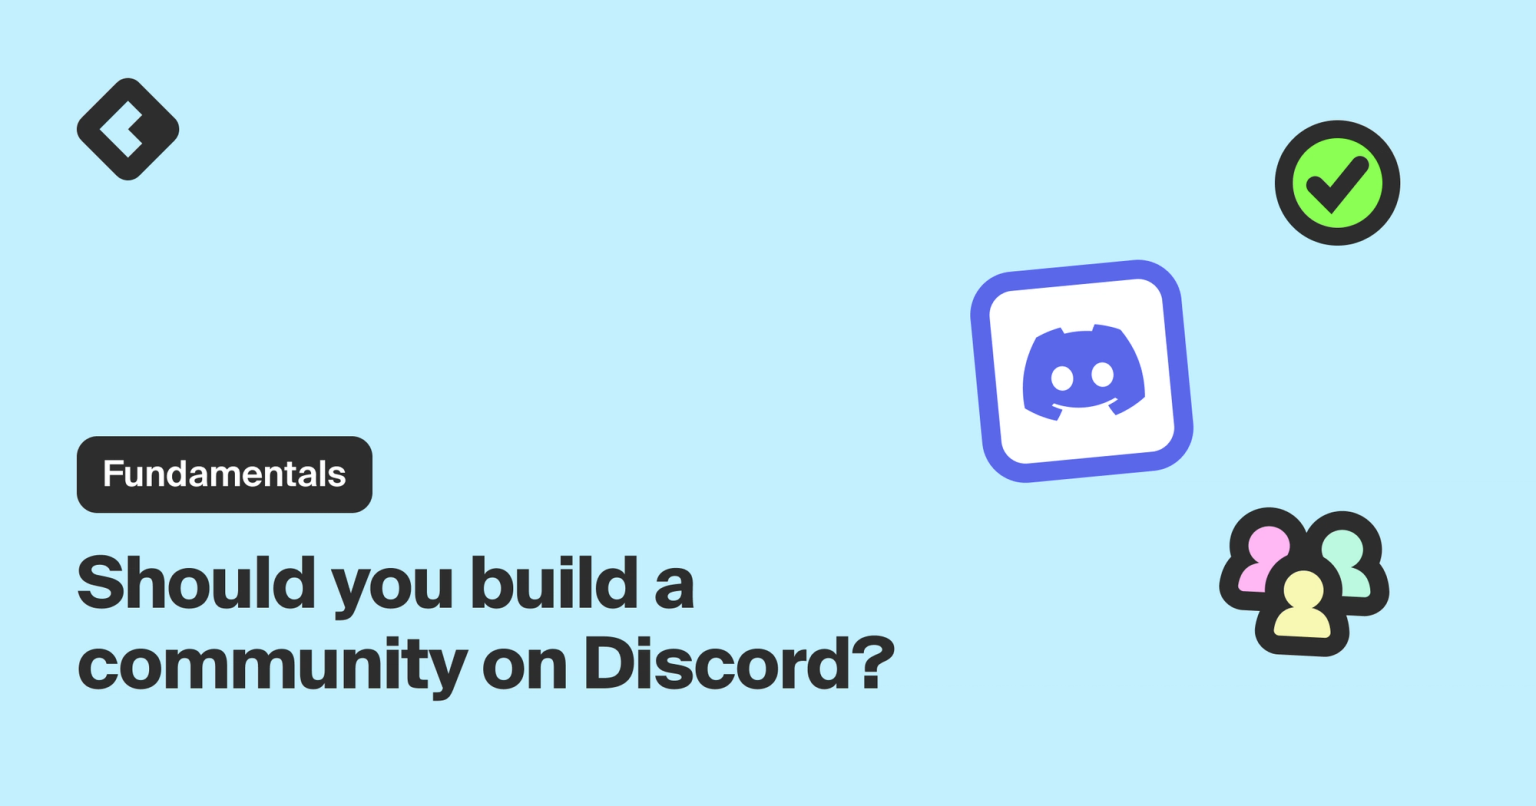 Build on Discord